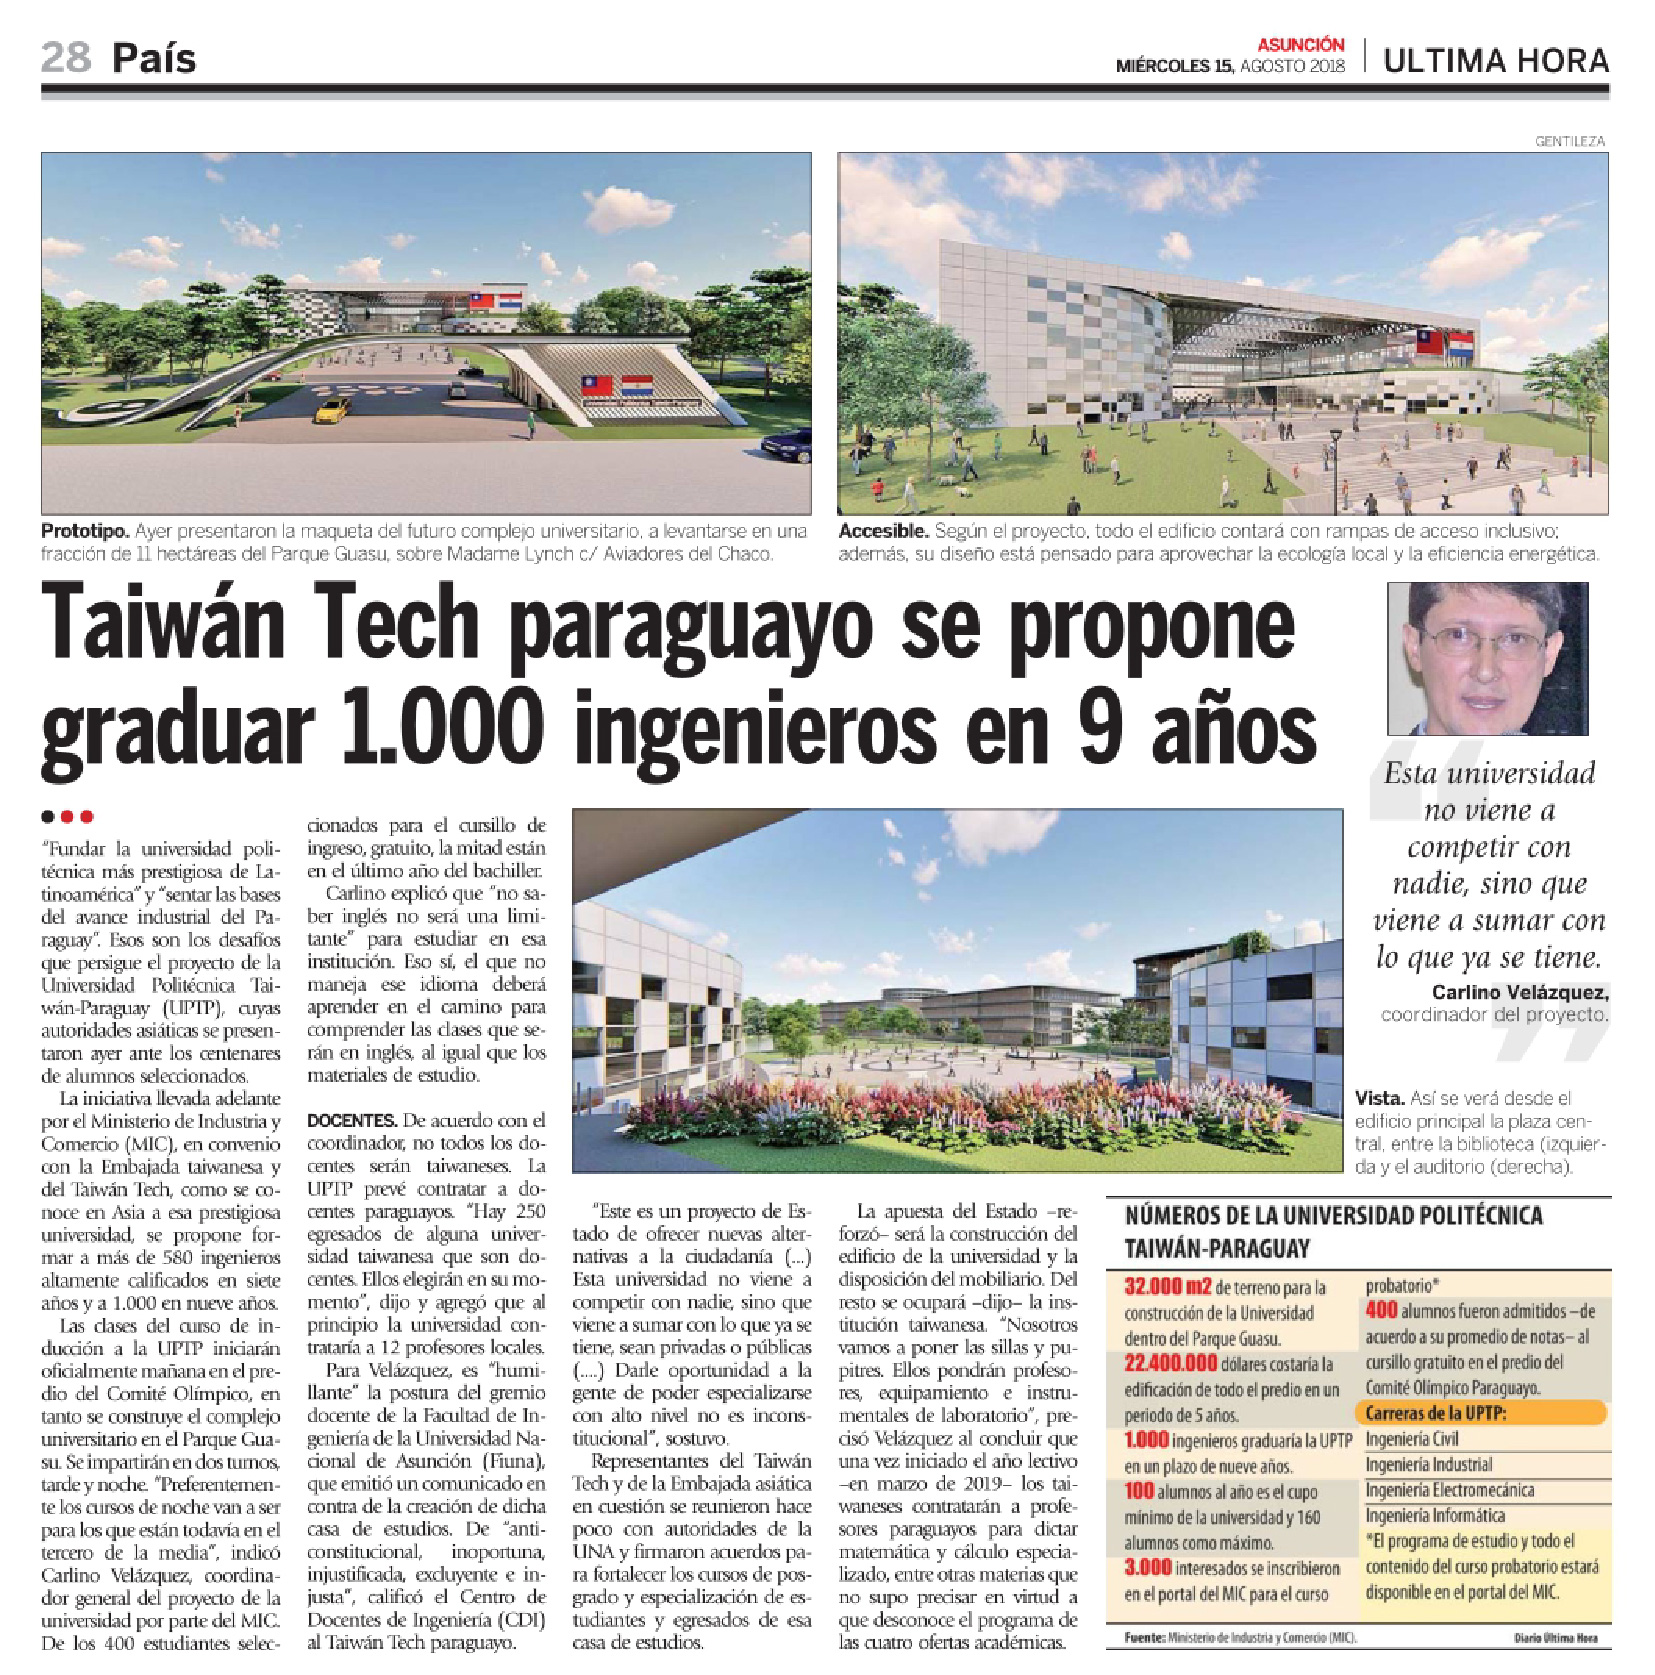 Taiwan-Paraguay Polytechnic University to graduate 1,000 engineers in nine years